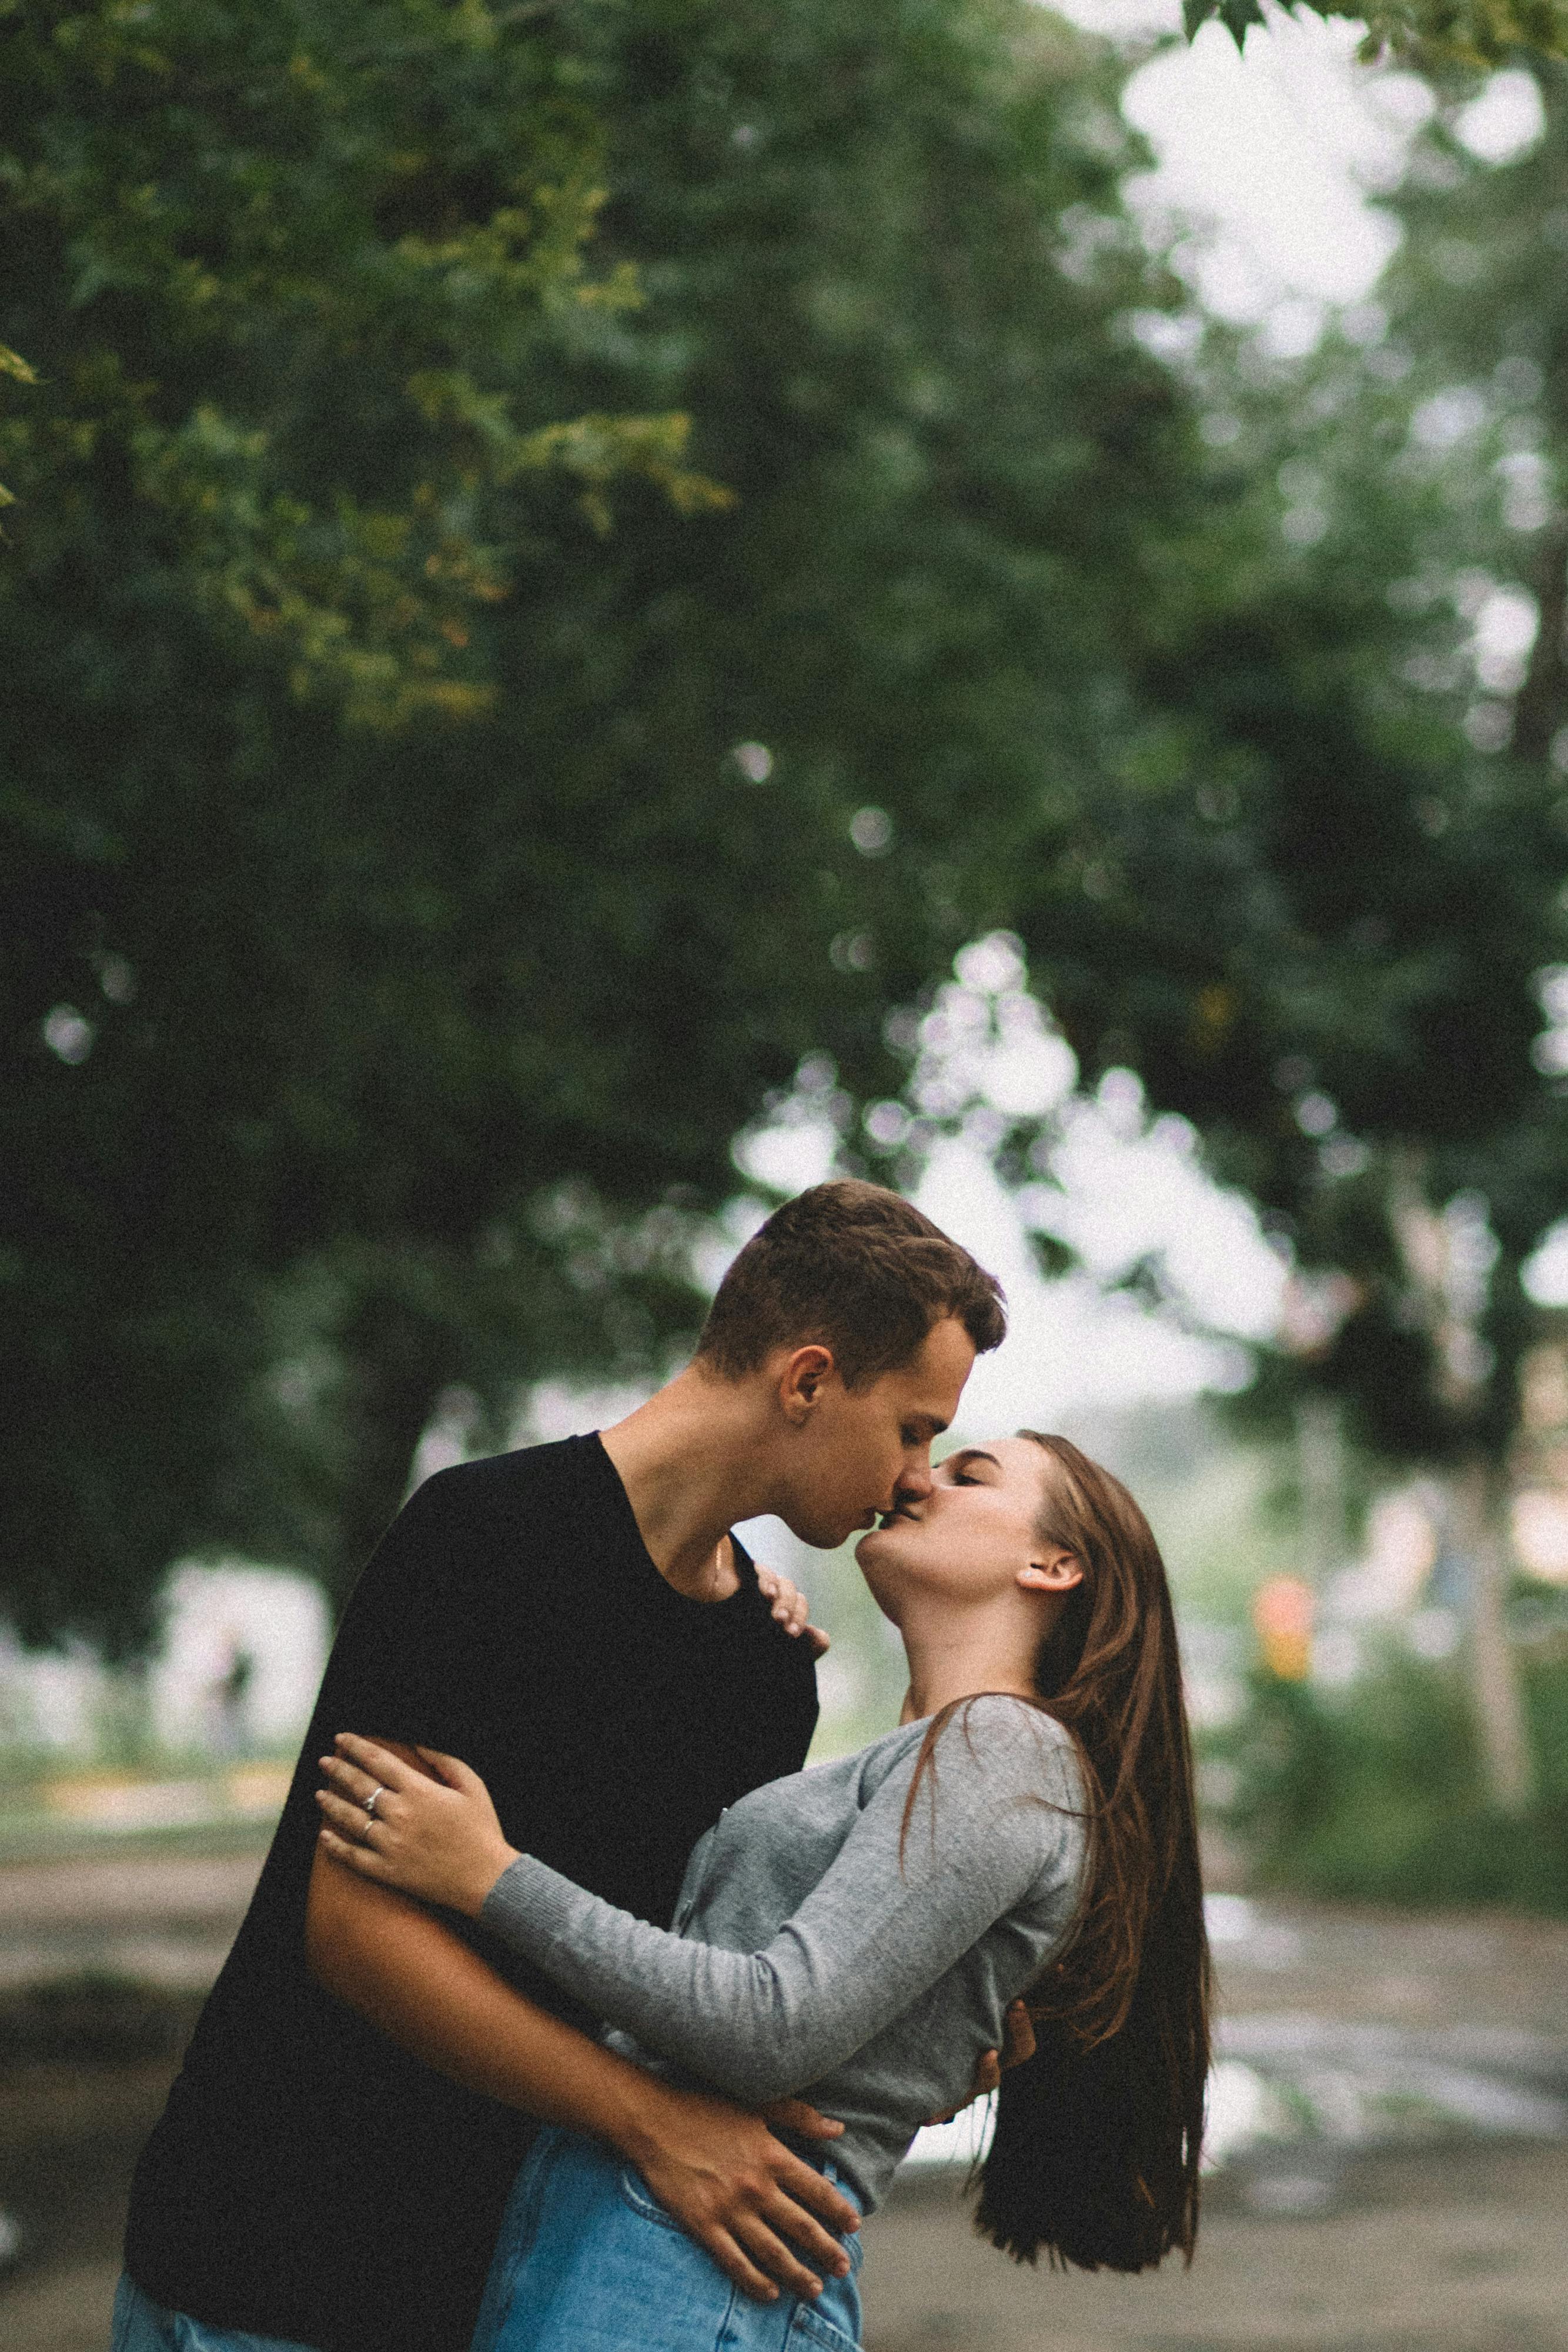 A teenage couple sharing a kiss | Source: Pexels